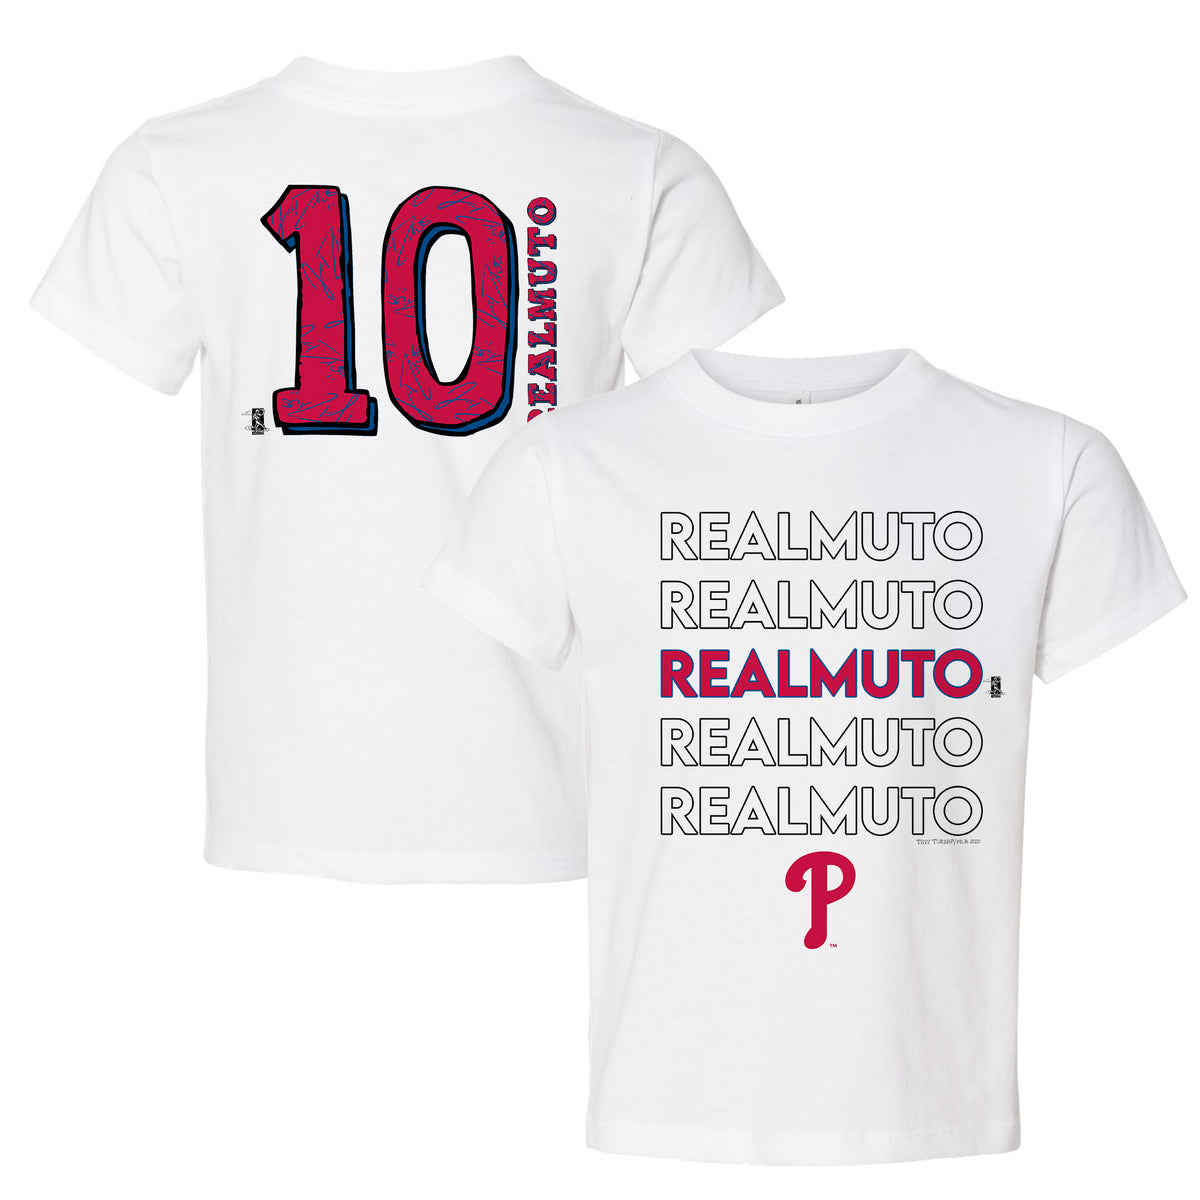 Toddler Tiny Turnip Red Philadelphia Phillies Baseball Love T-Shirt Size:3T